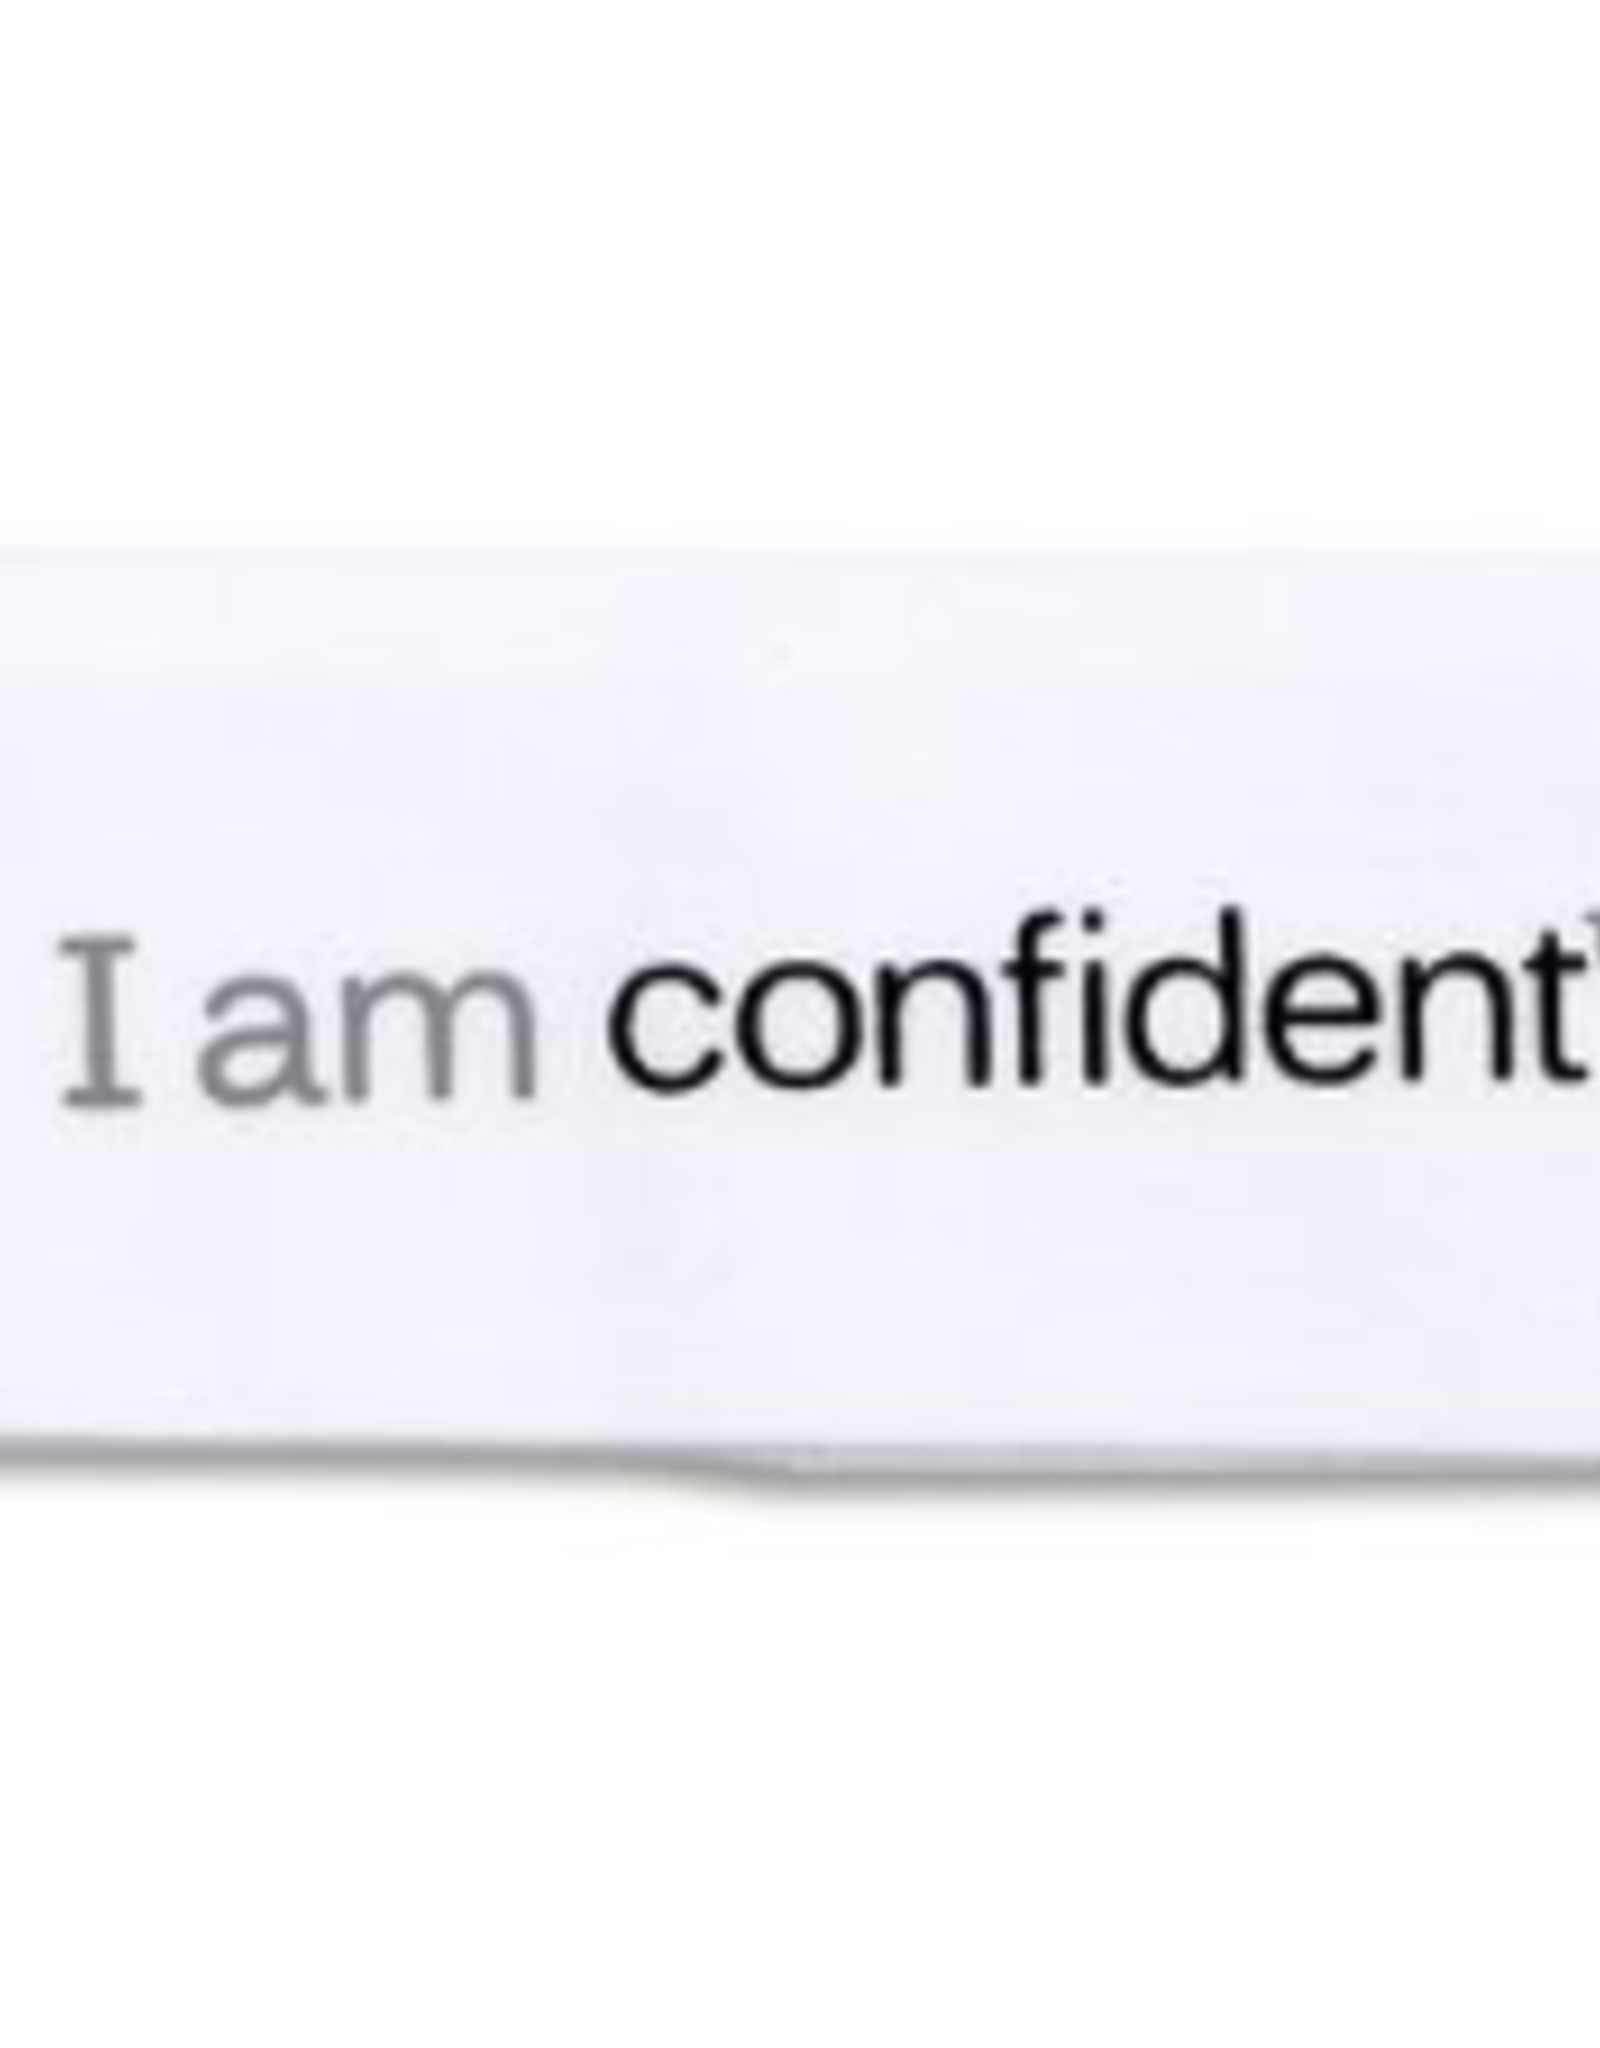 Apparel Bargain Barn - Notes to Self: I am Confident White Headband